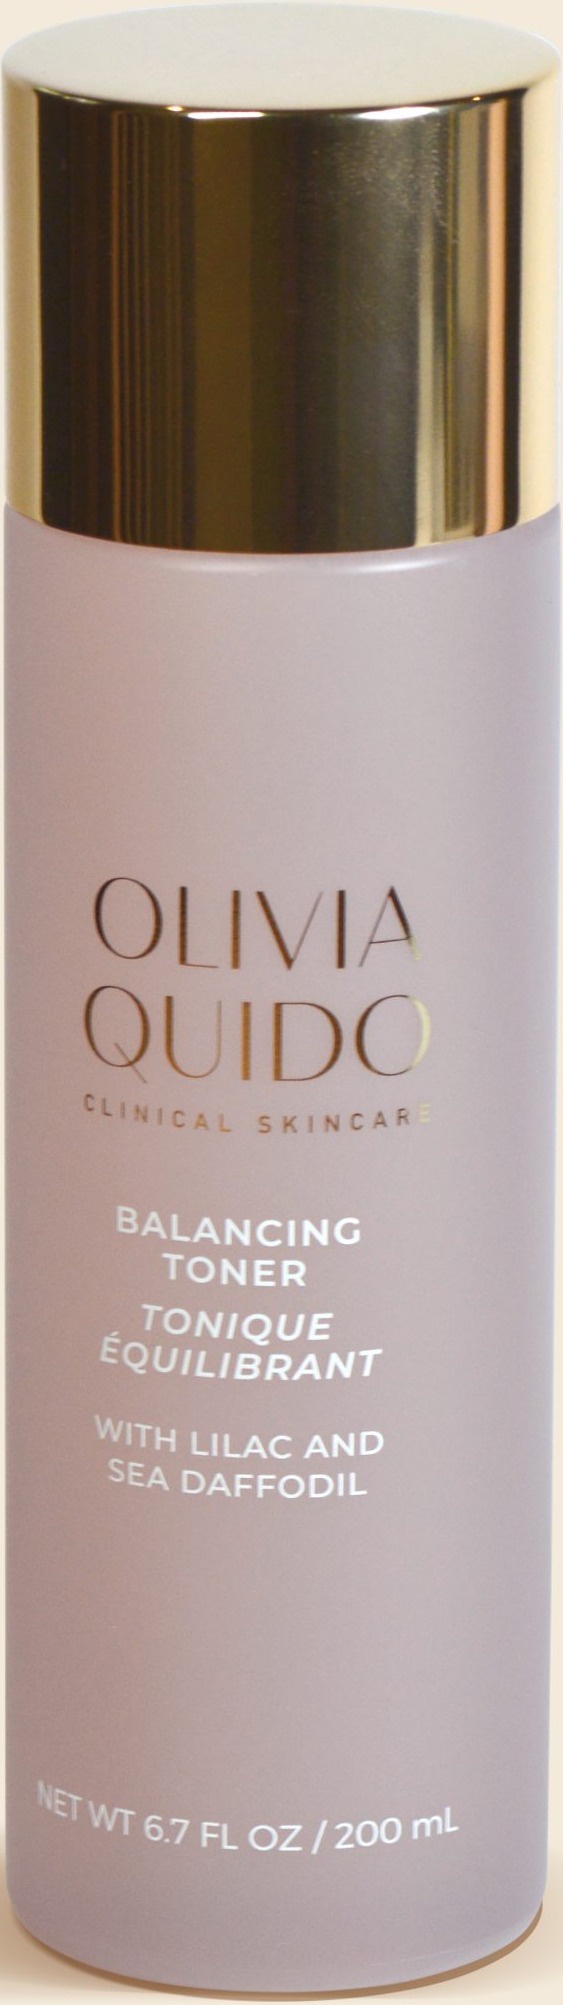 Olivia Quido Skincare Balancing Toner With Lilac & Sea Daffodil